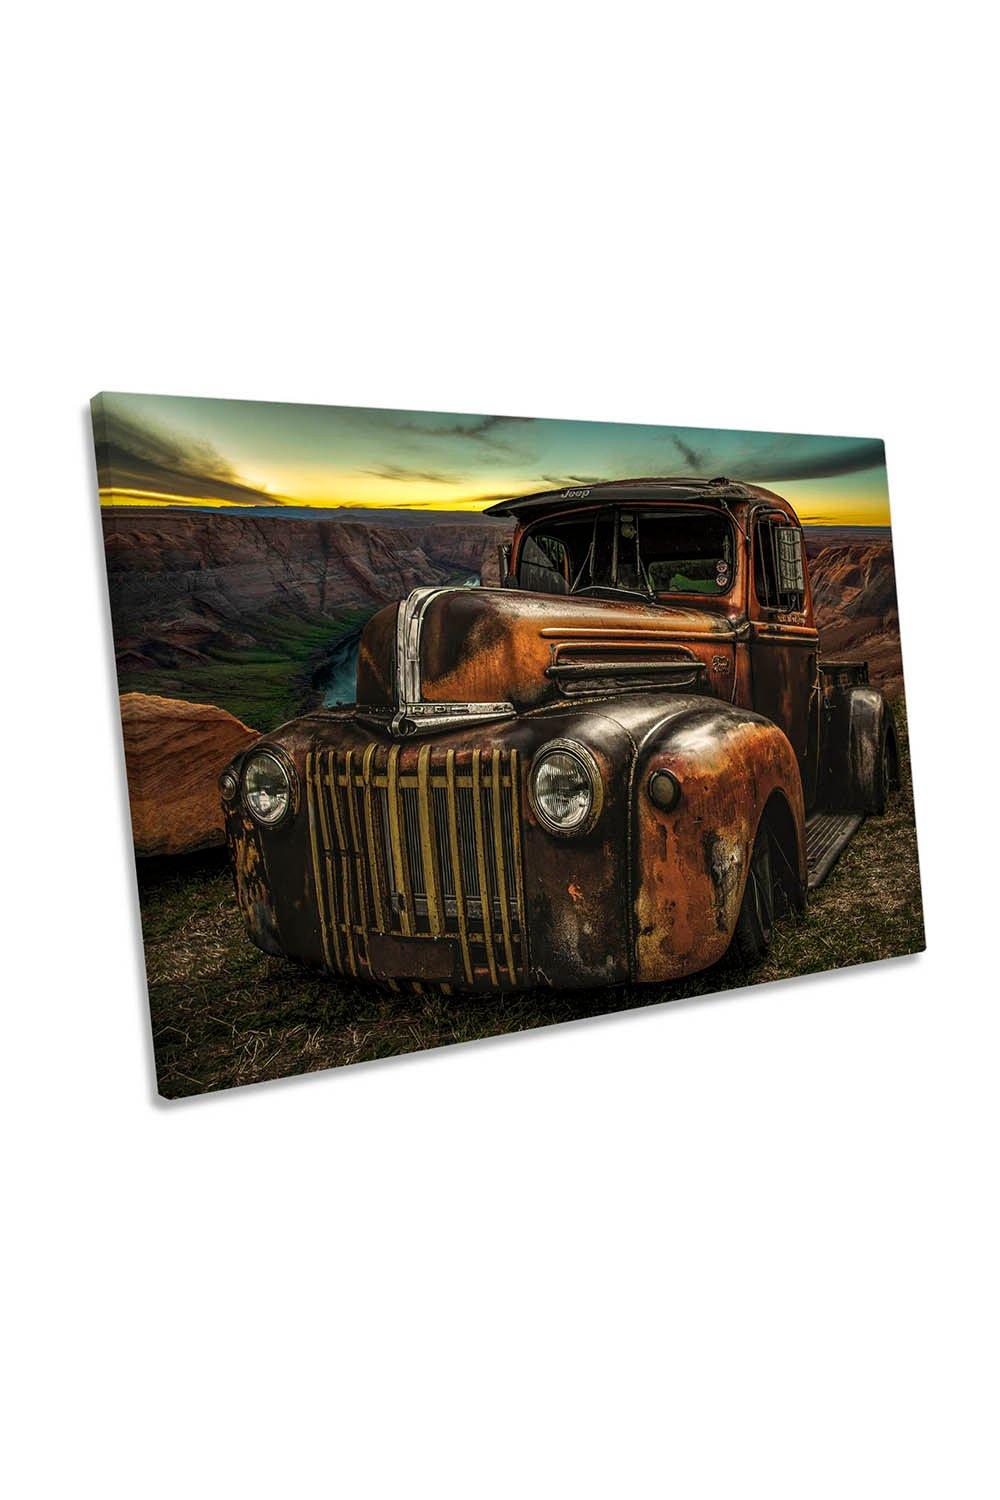 Vintage Festival Waroux Brown Vintage Truck Canvas Wall Art Picture Print